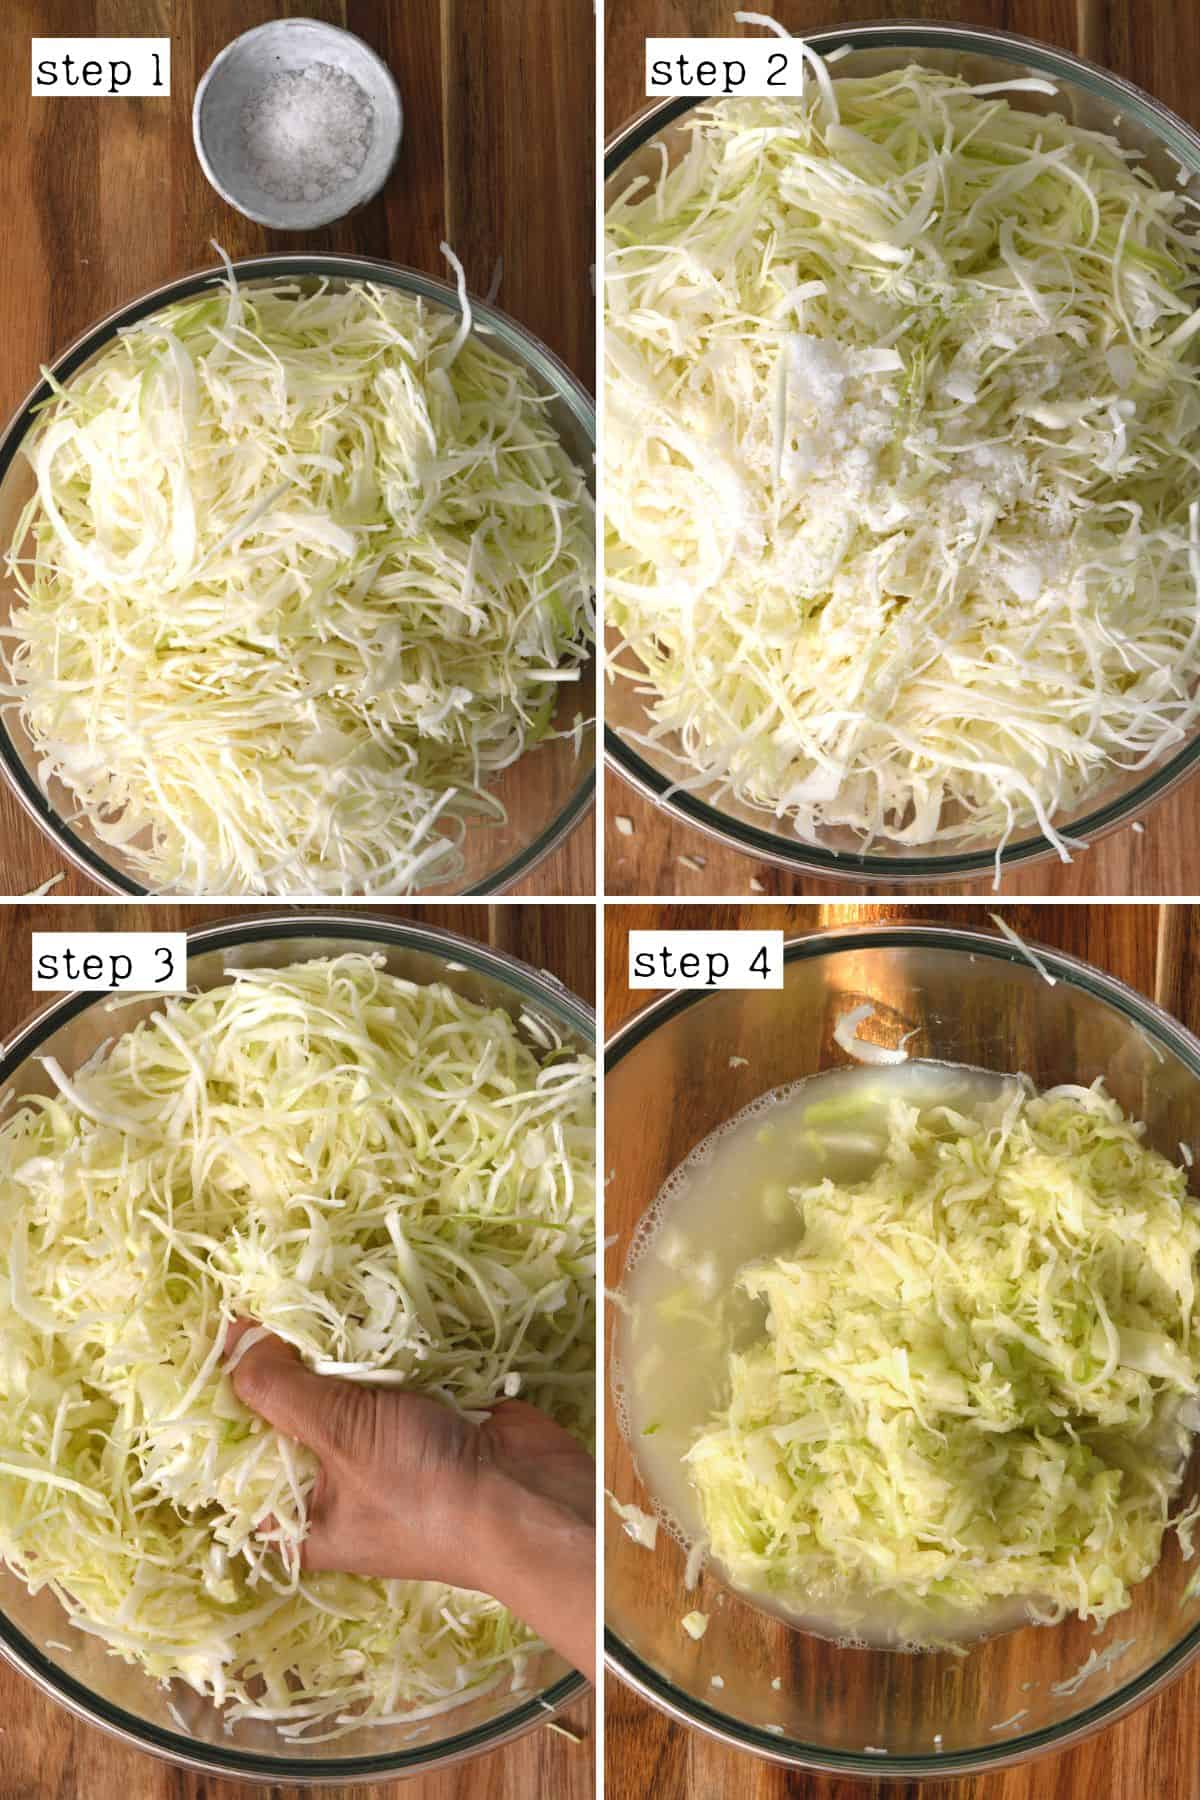 Steps for preparing Sauerkraut